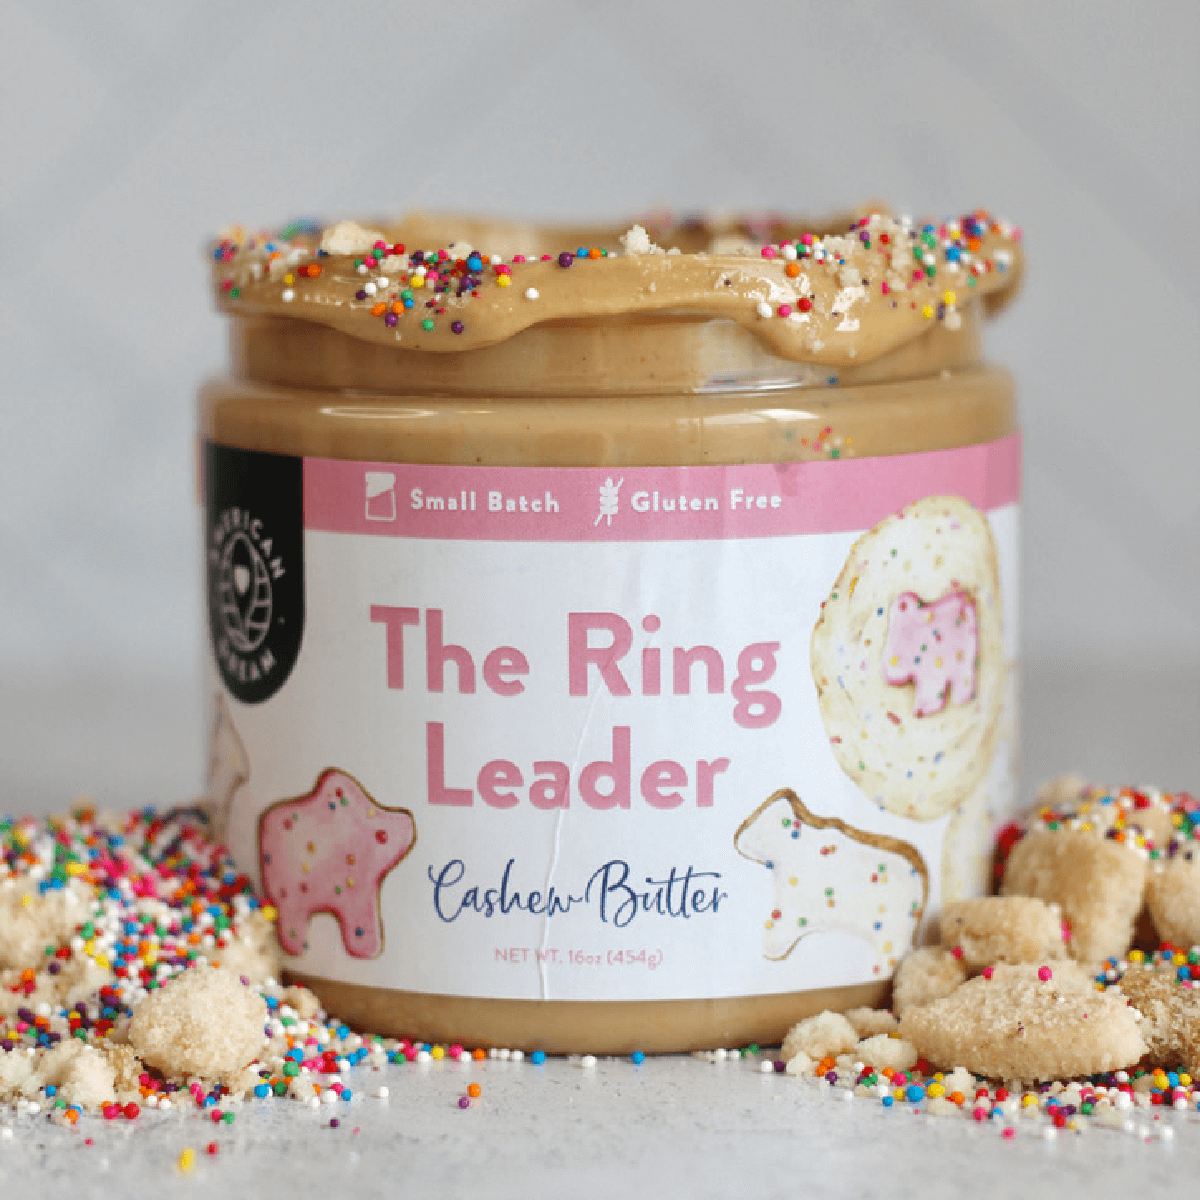 Gluten-Free The Ring Leader Cashew Butter